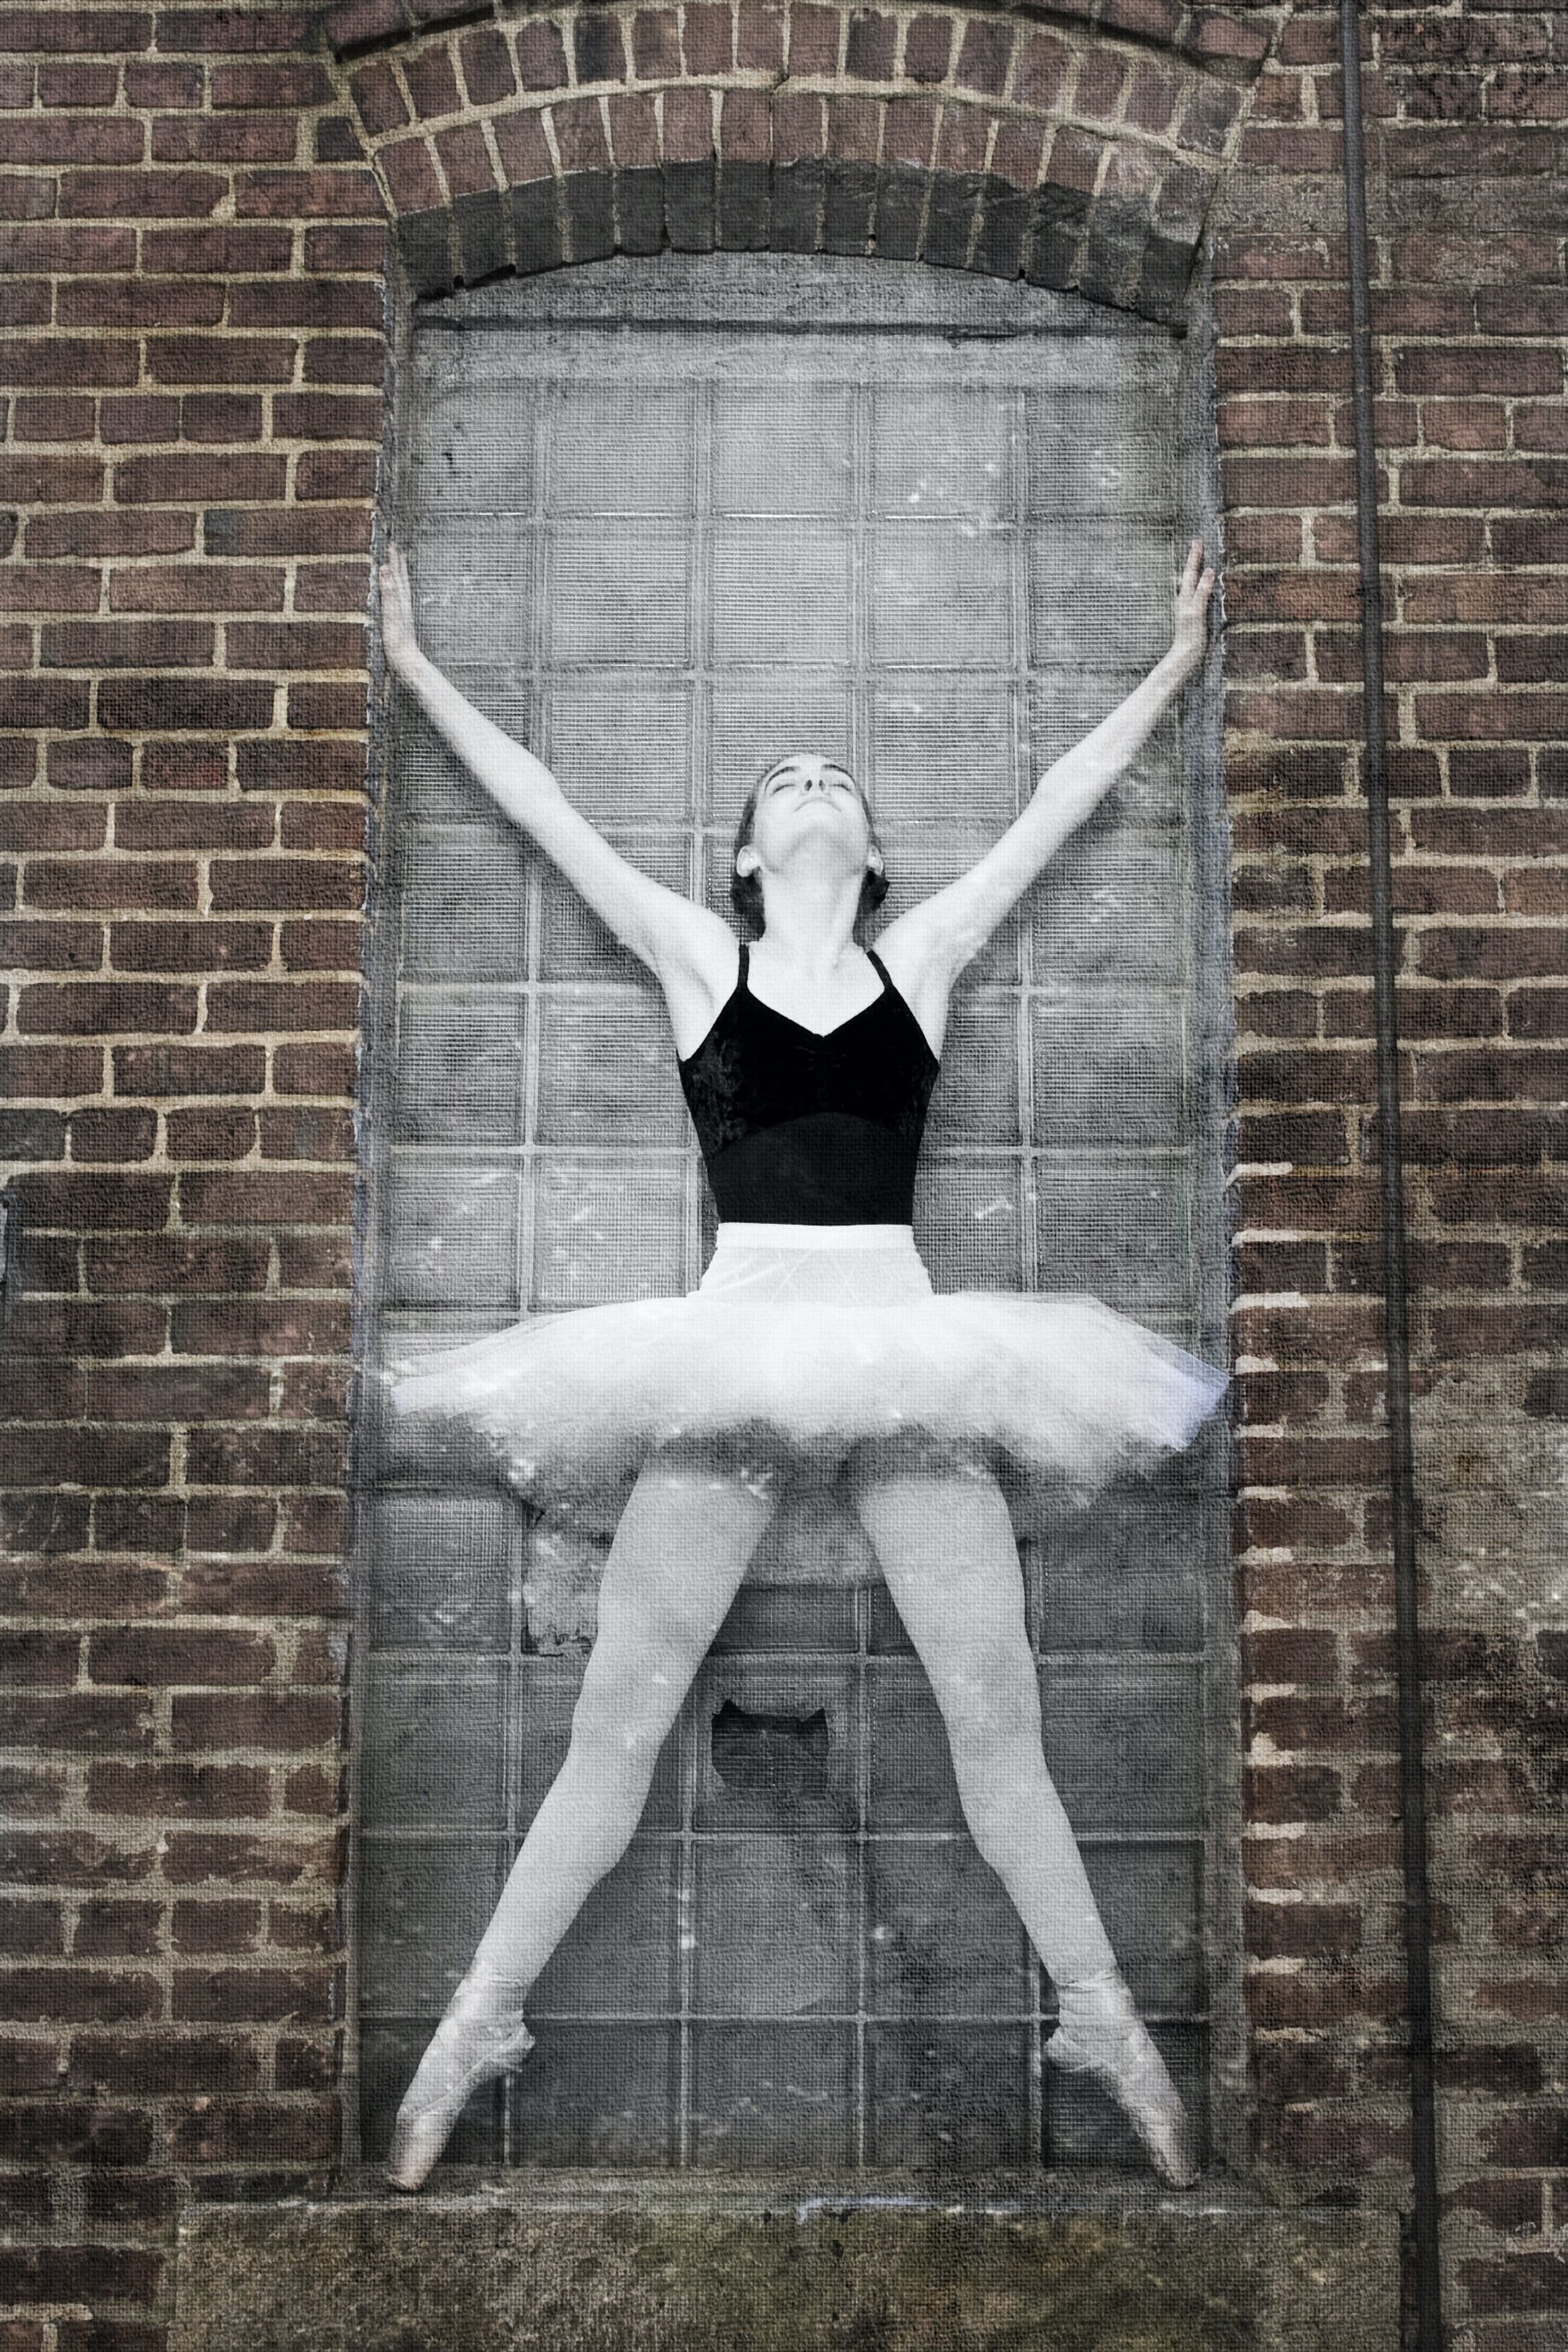 Senior photo ballerina on pointe in urban setting brick wall 